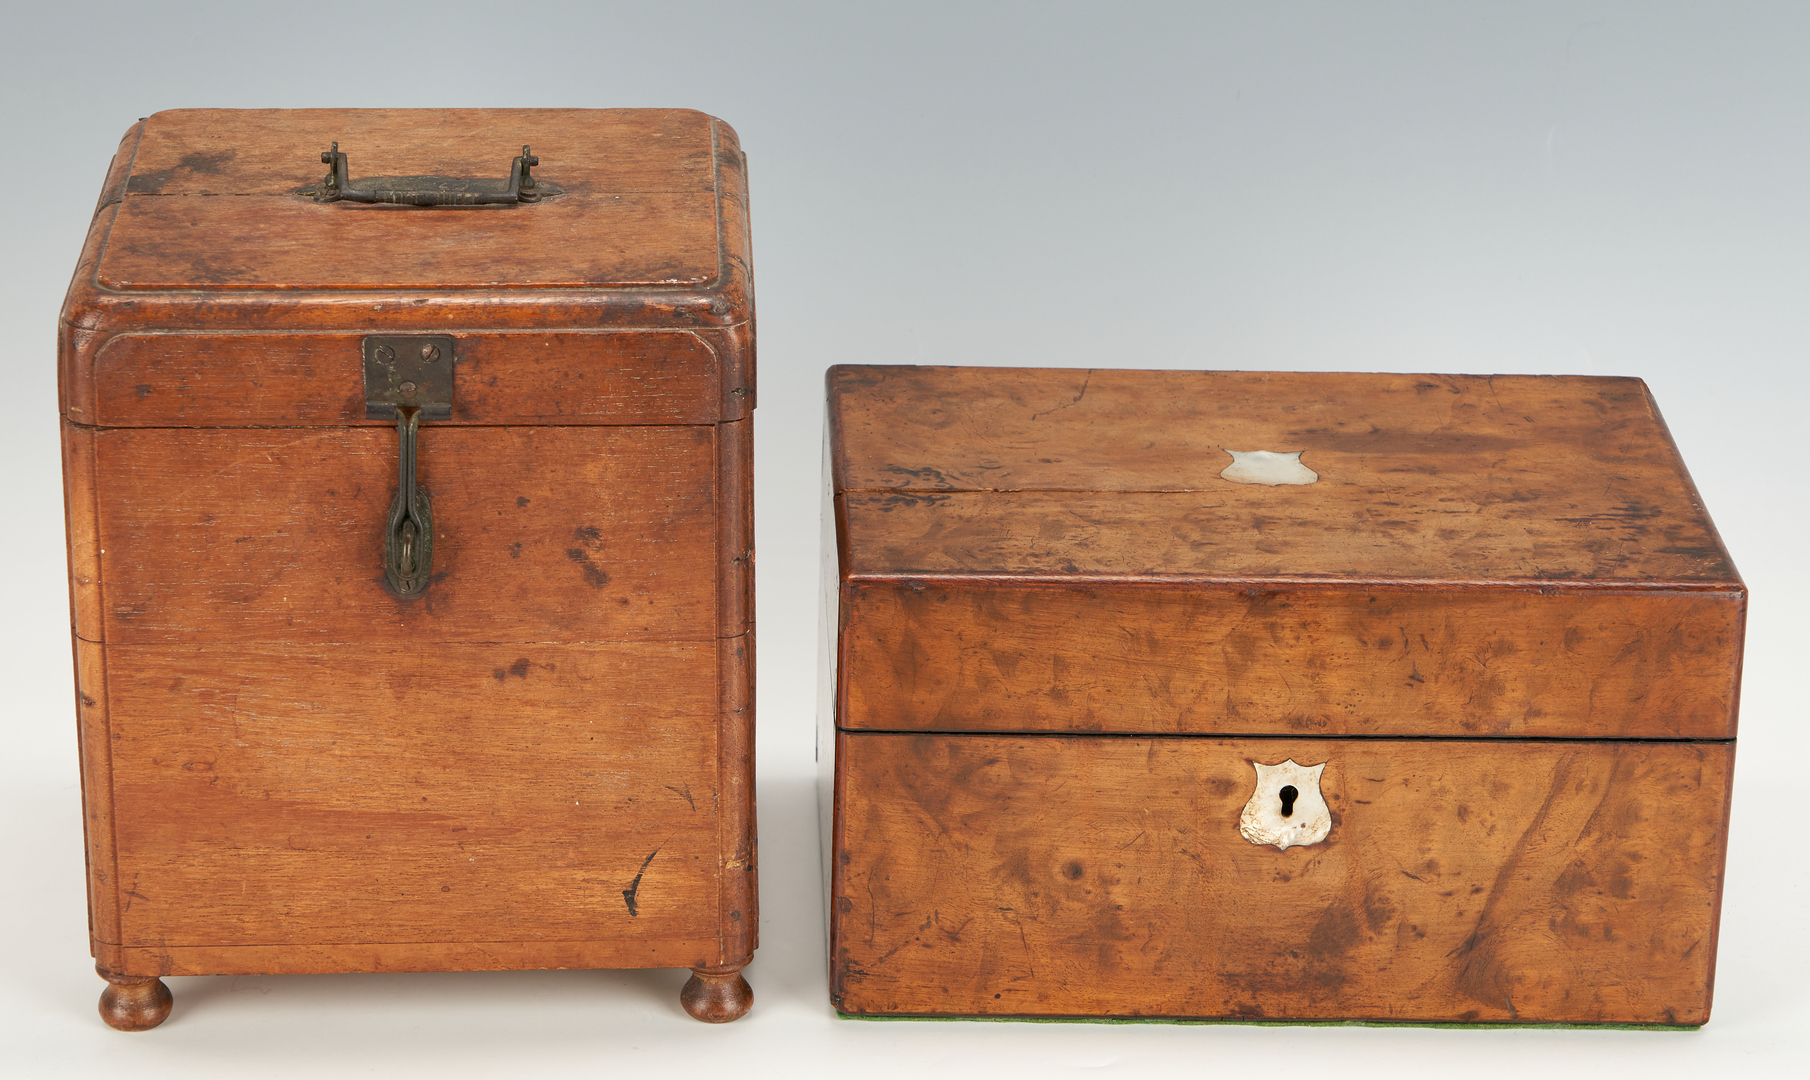 Lot 933: 4 Wooden Boxes, incl. Burlwood Dresser Box